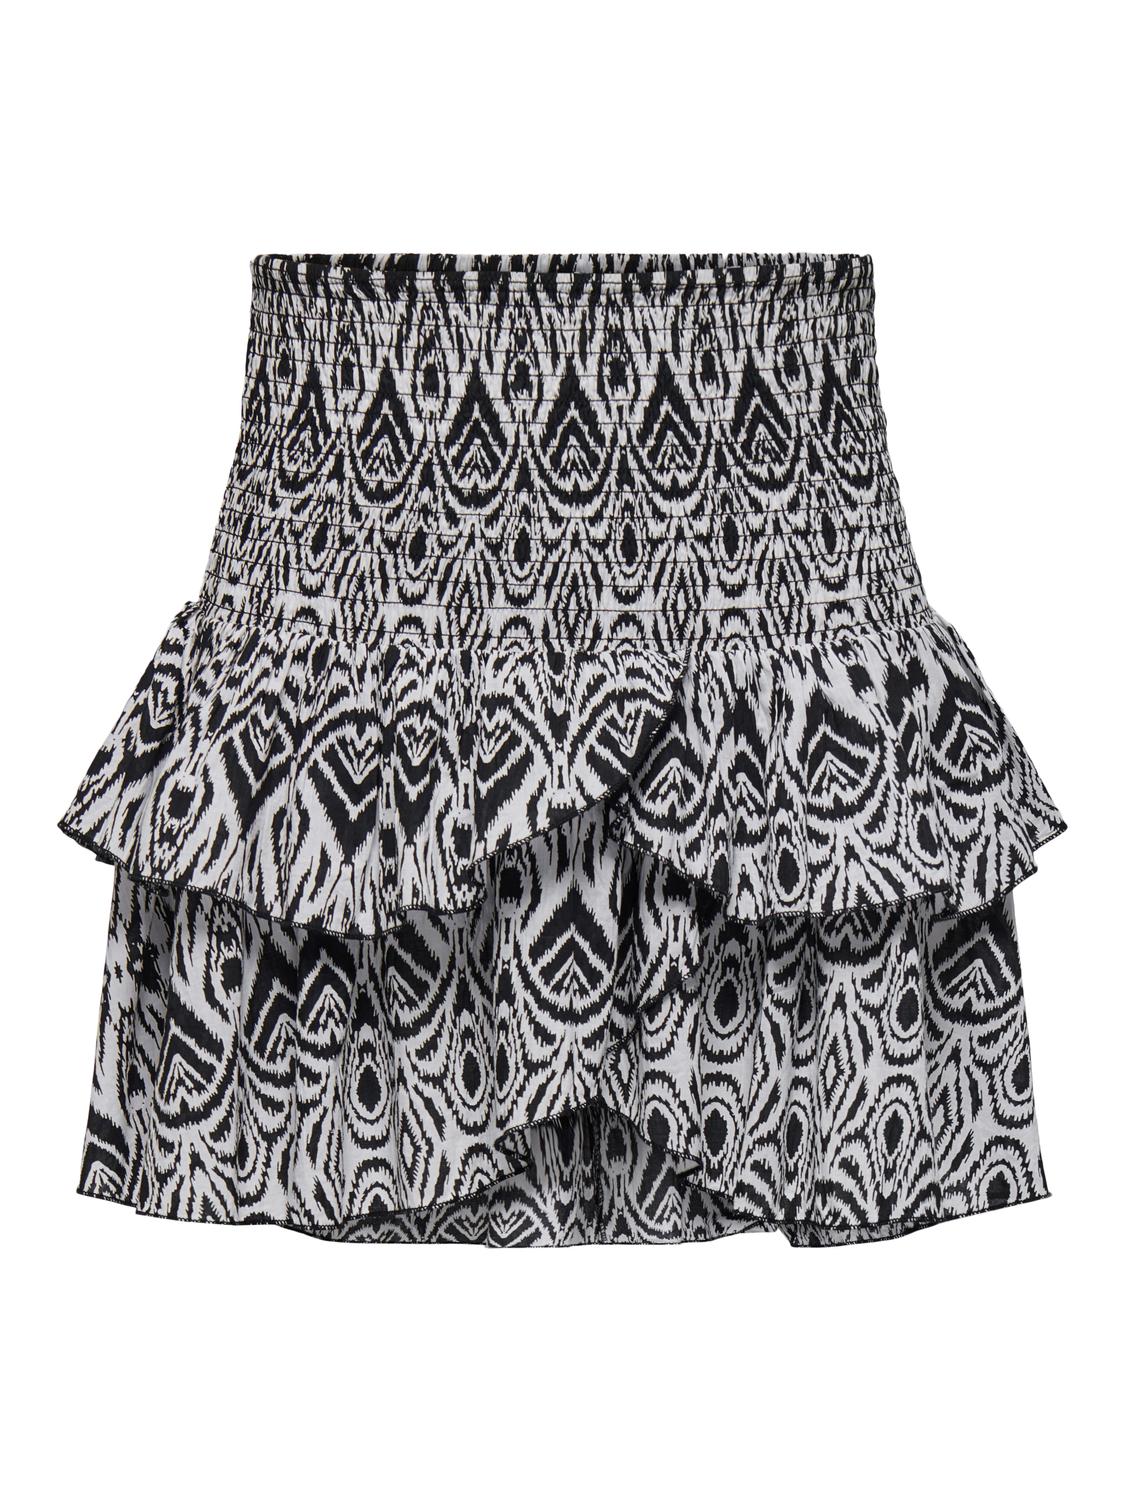 PGLALORI Short Skirt - Mønstret